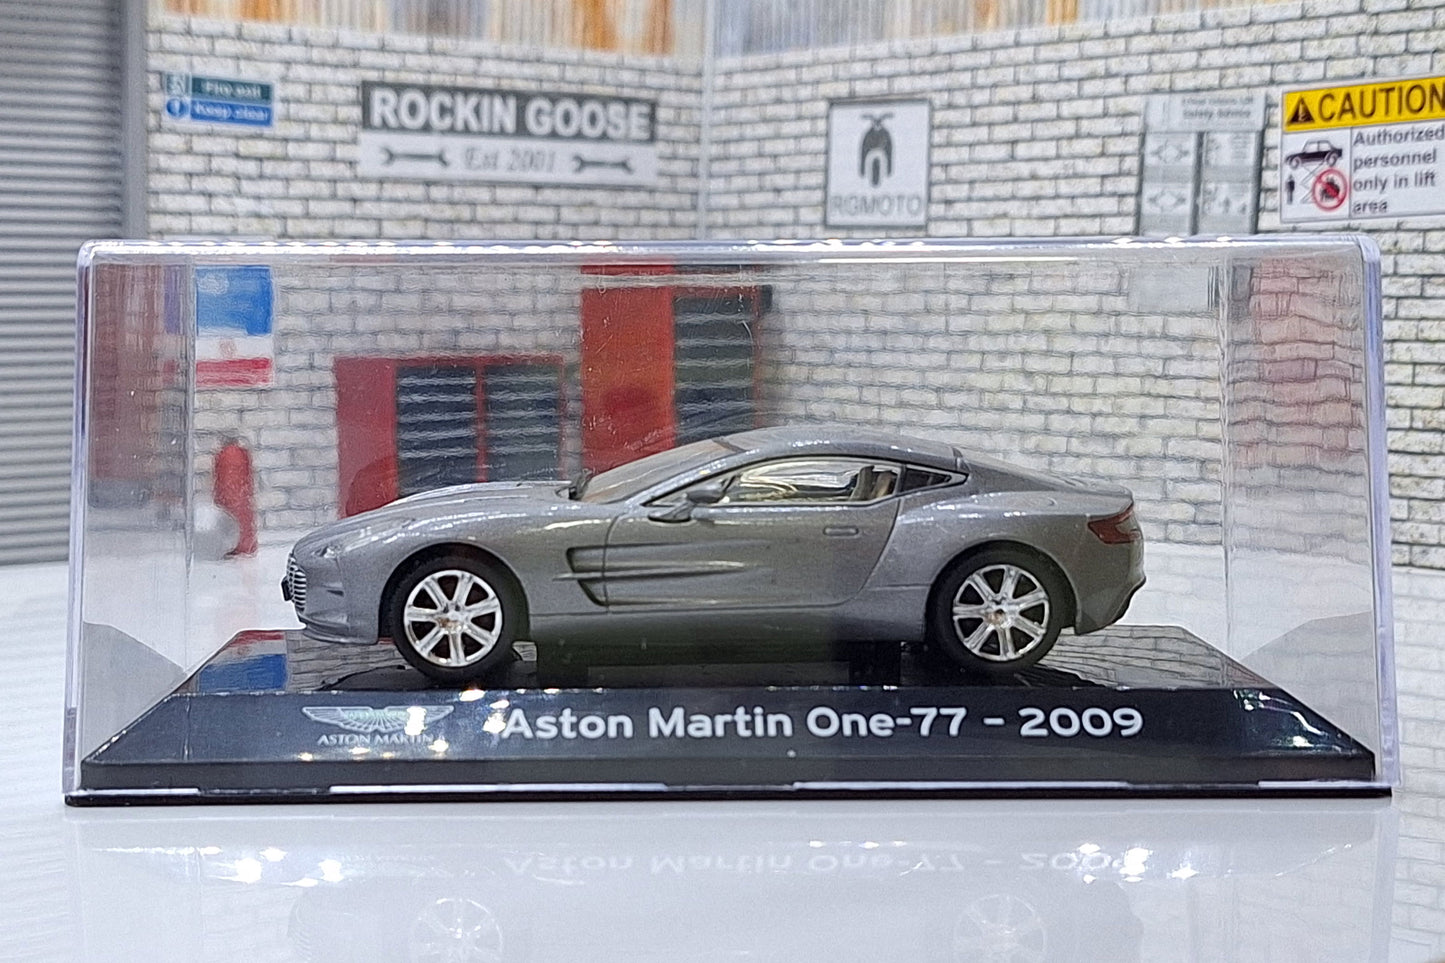 Aston Martin One 77 2009 Cased 1:43 Scale Supercar